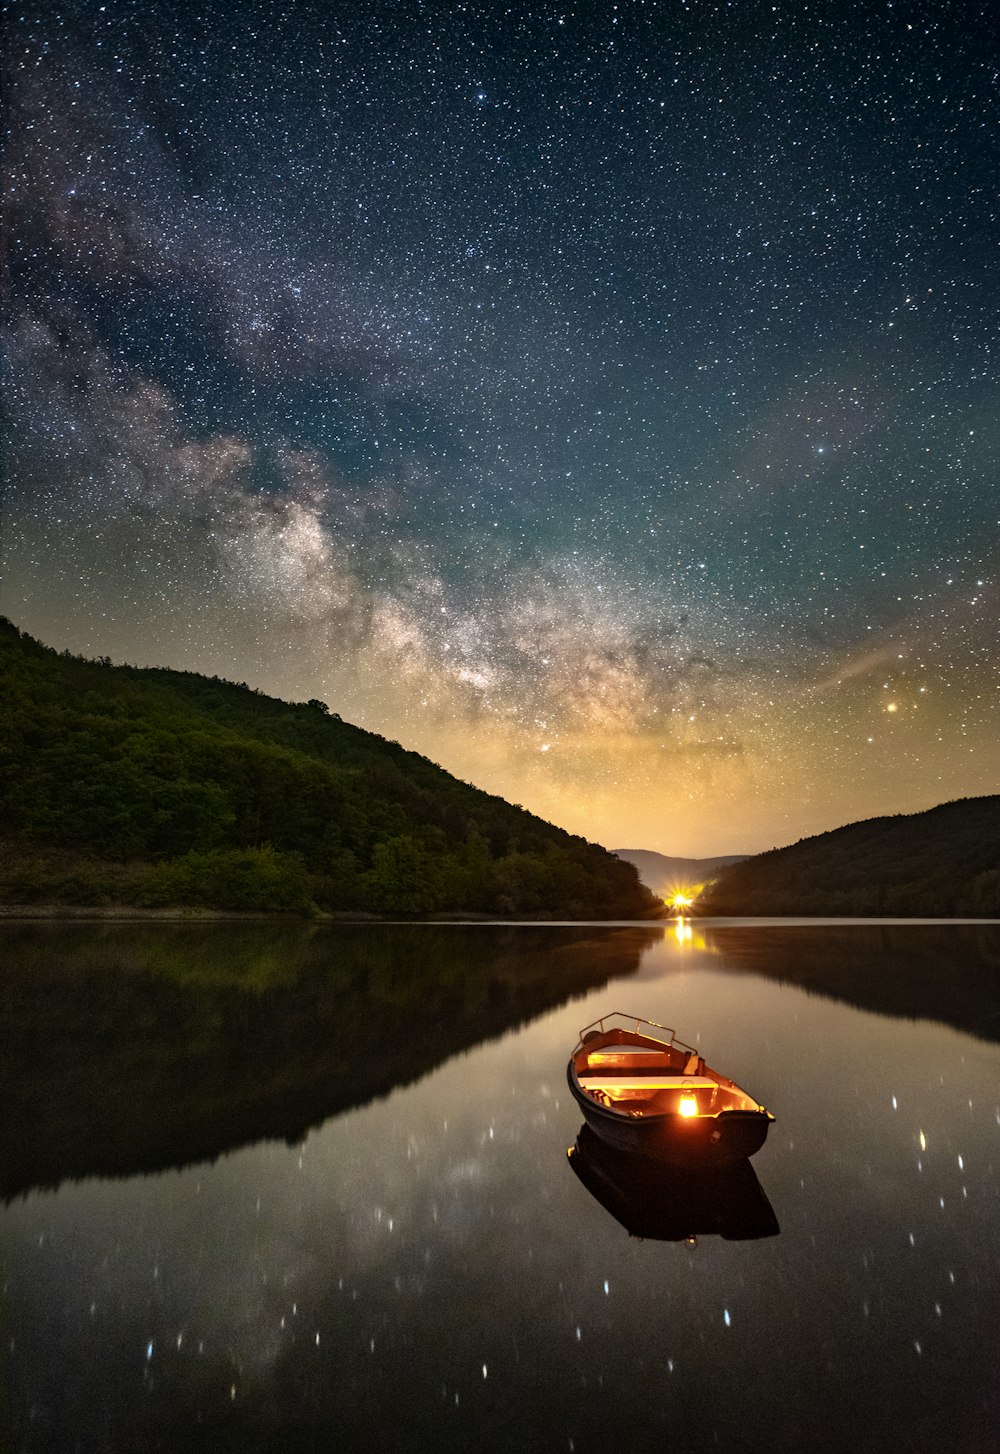 boat on lake near mountain during night time